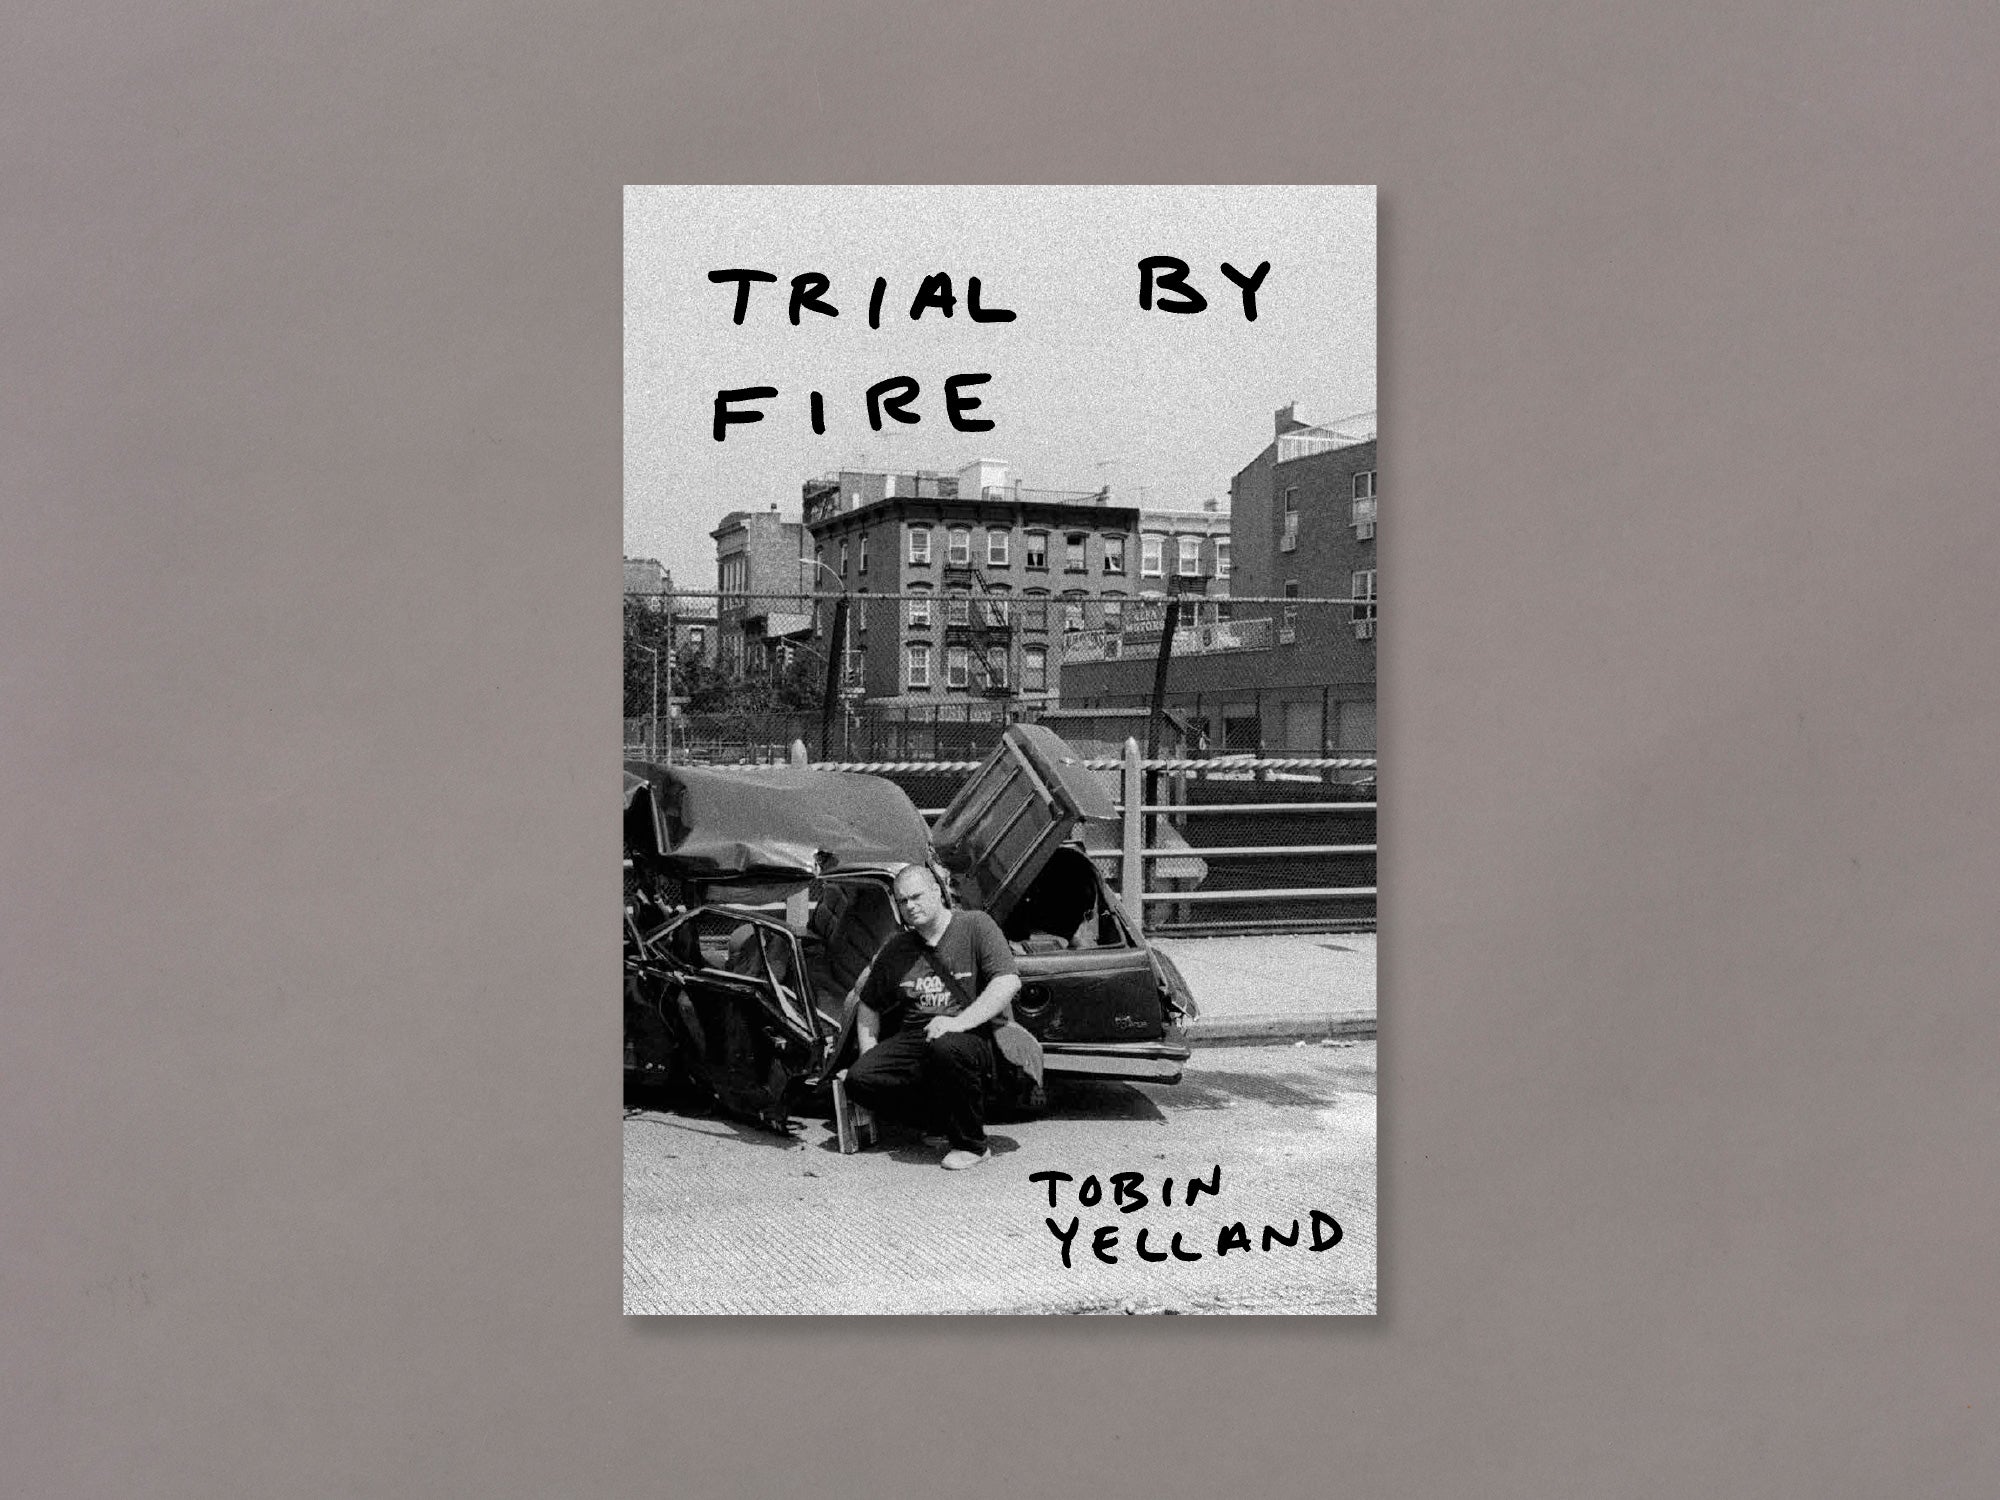 Tobin Yelland - Trial By Fire